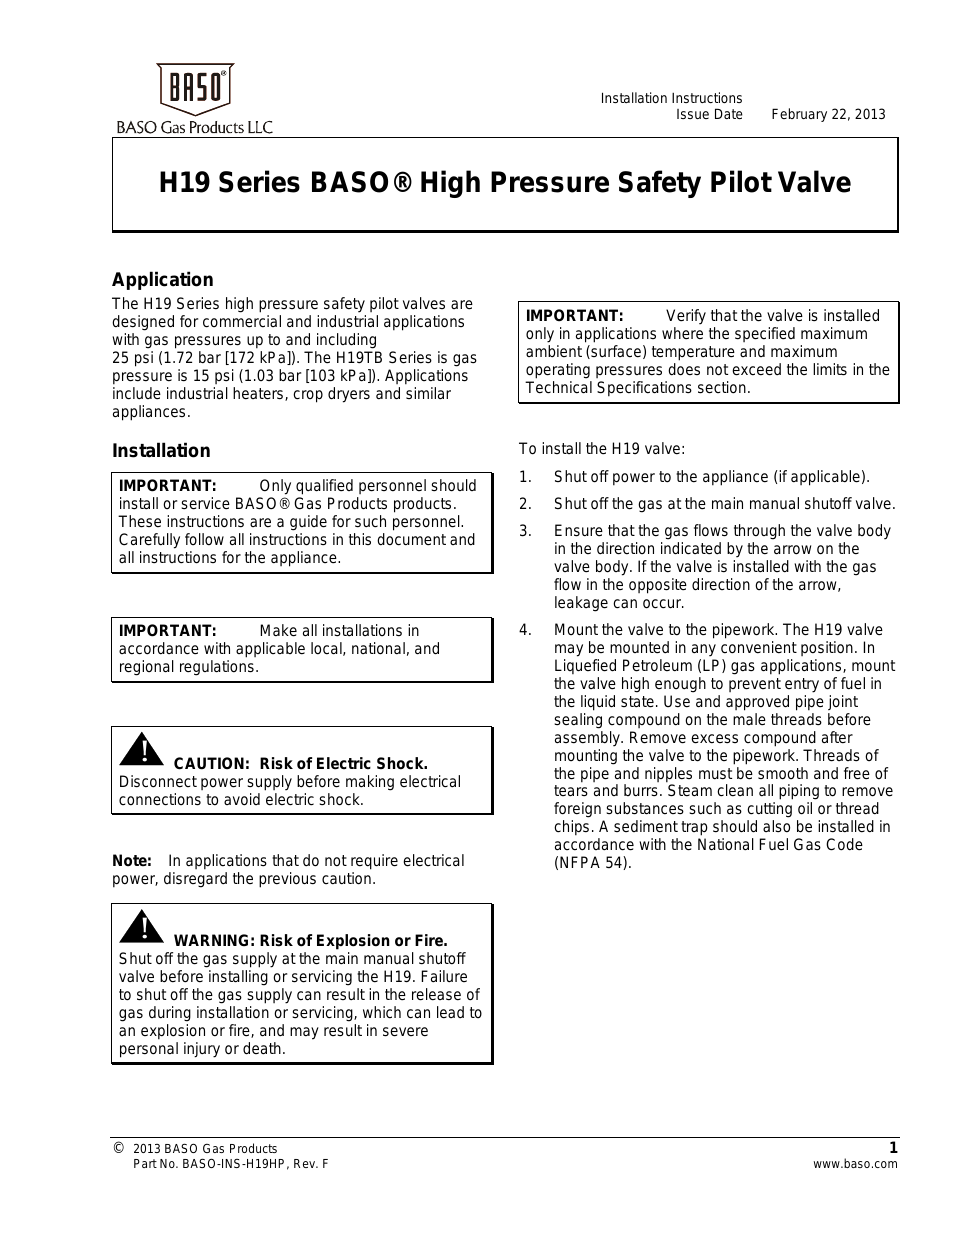 H19 Series High Pressure Safety Pilot Valve